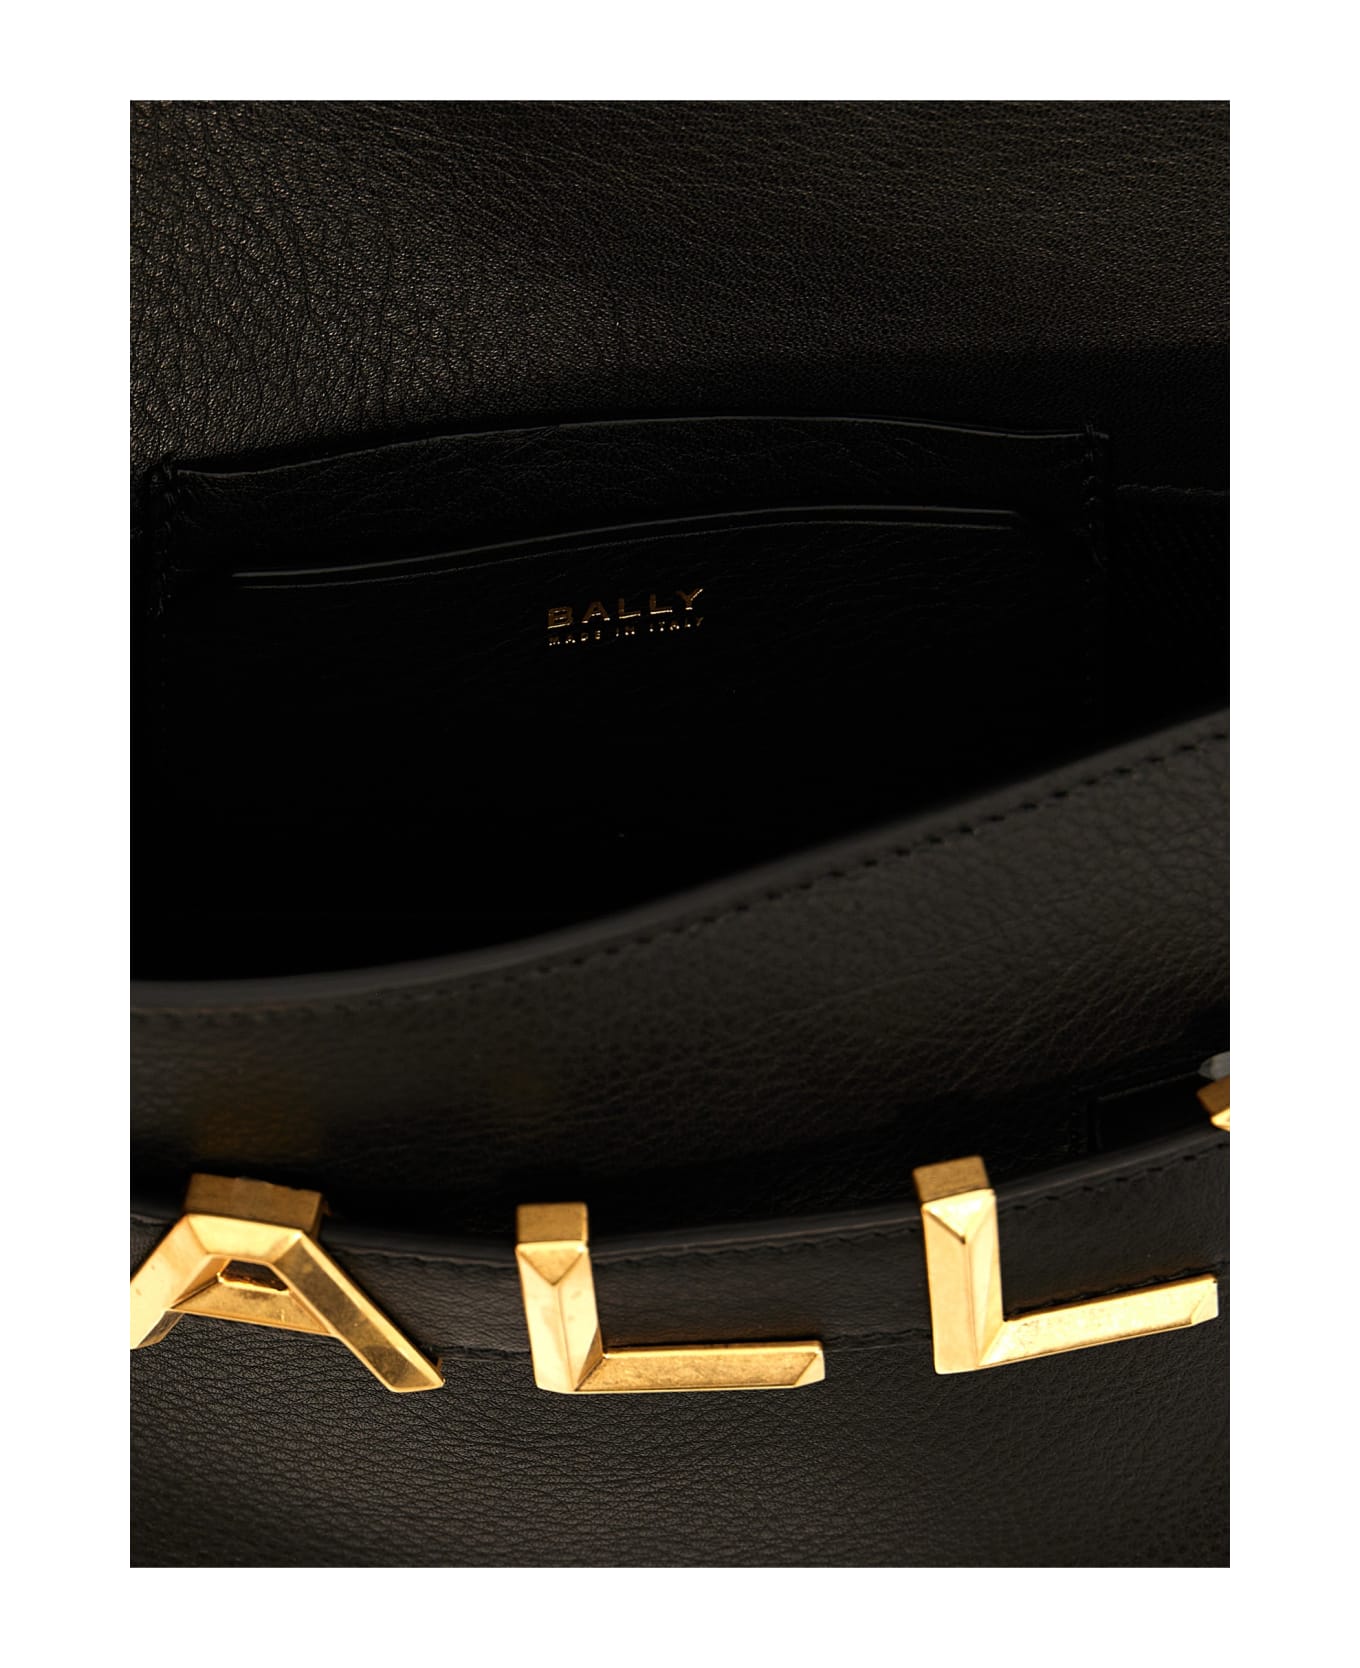 Bally Logo Crossbody Bag - Black+oro